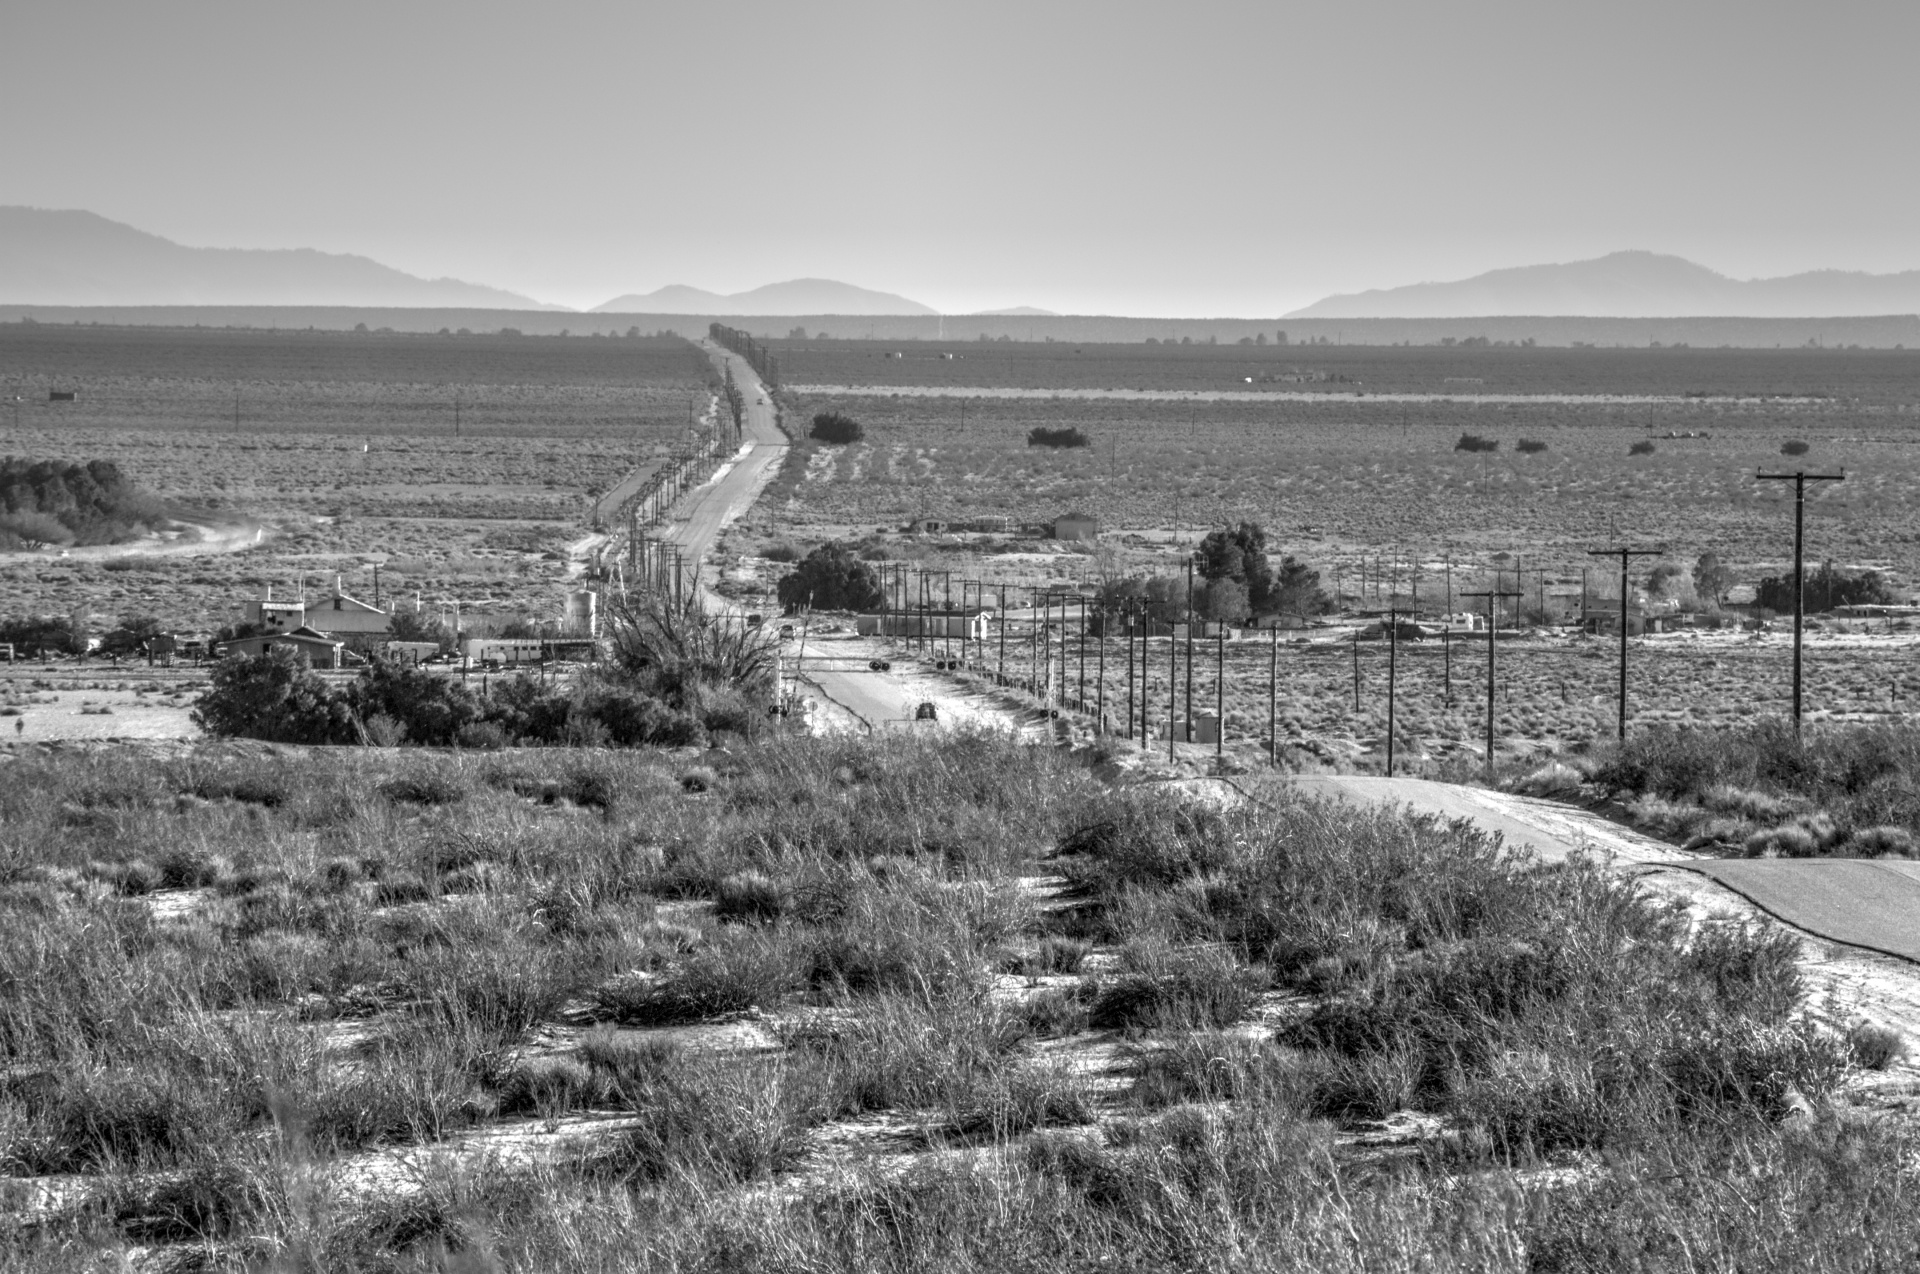 desert highway road free photo